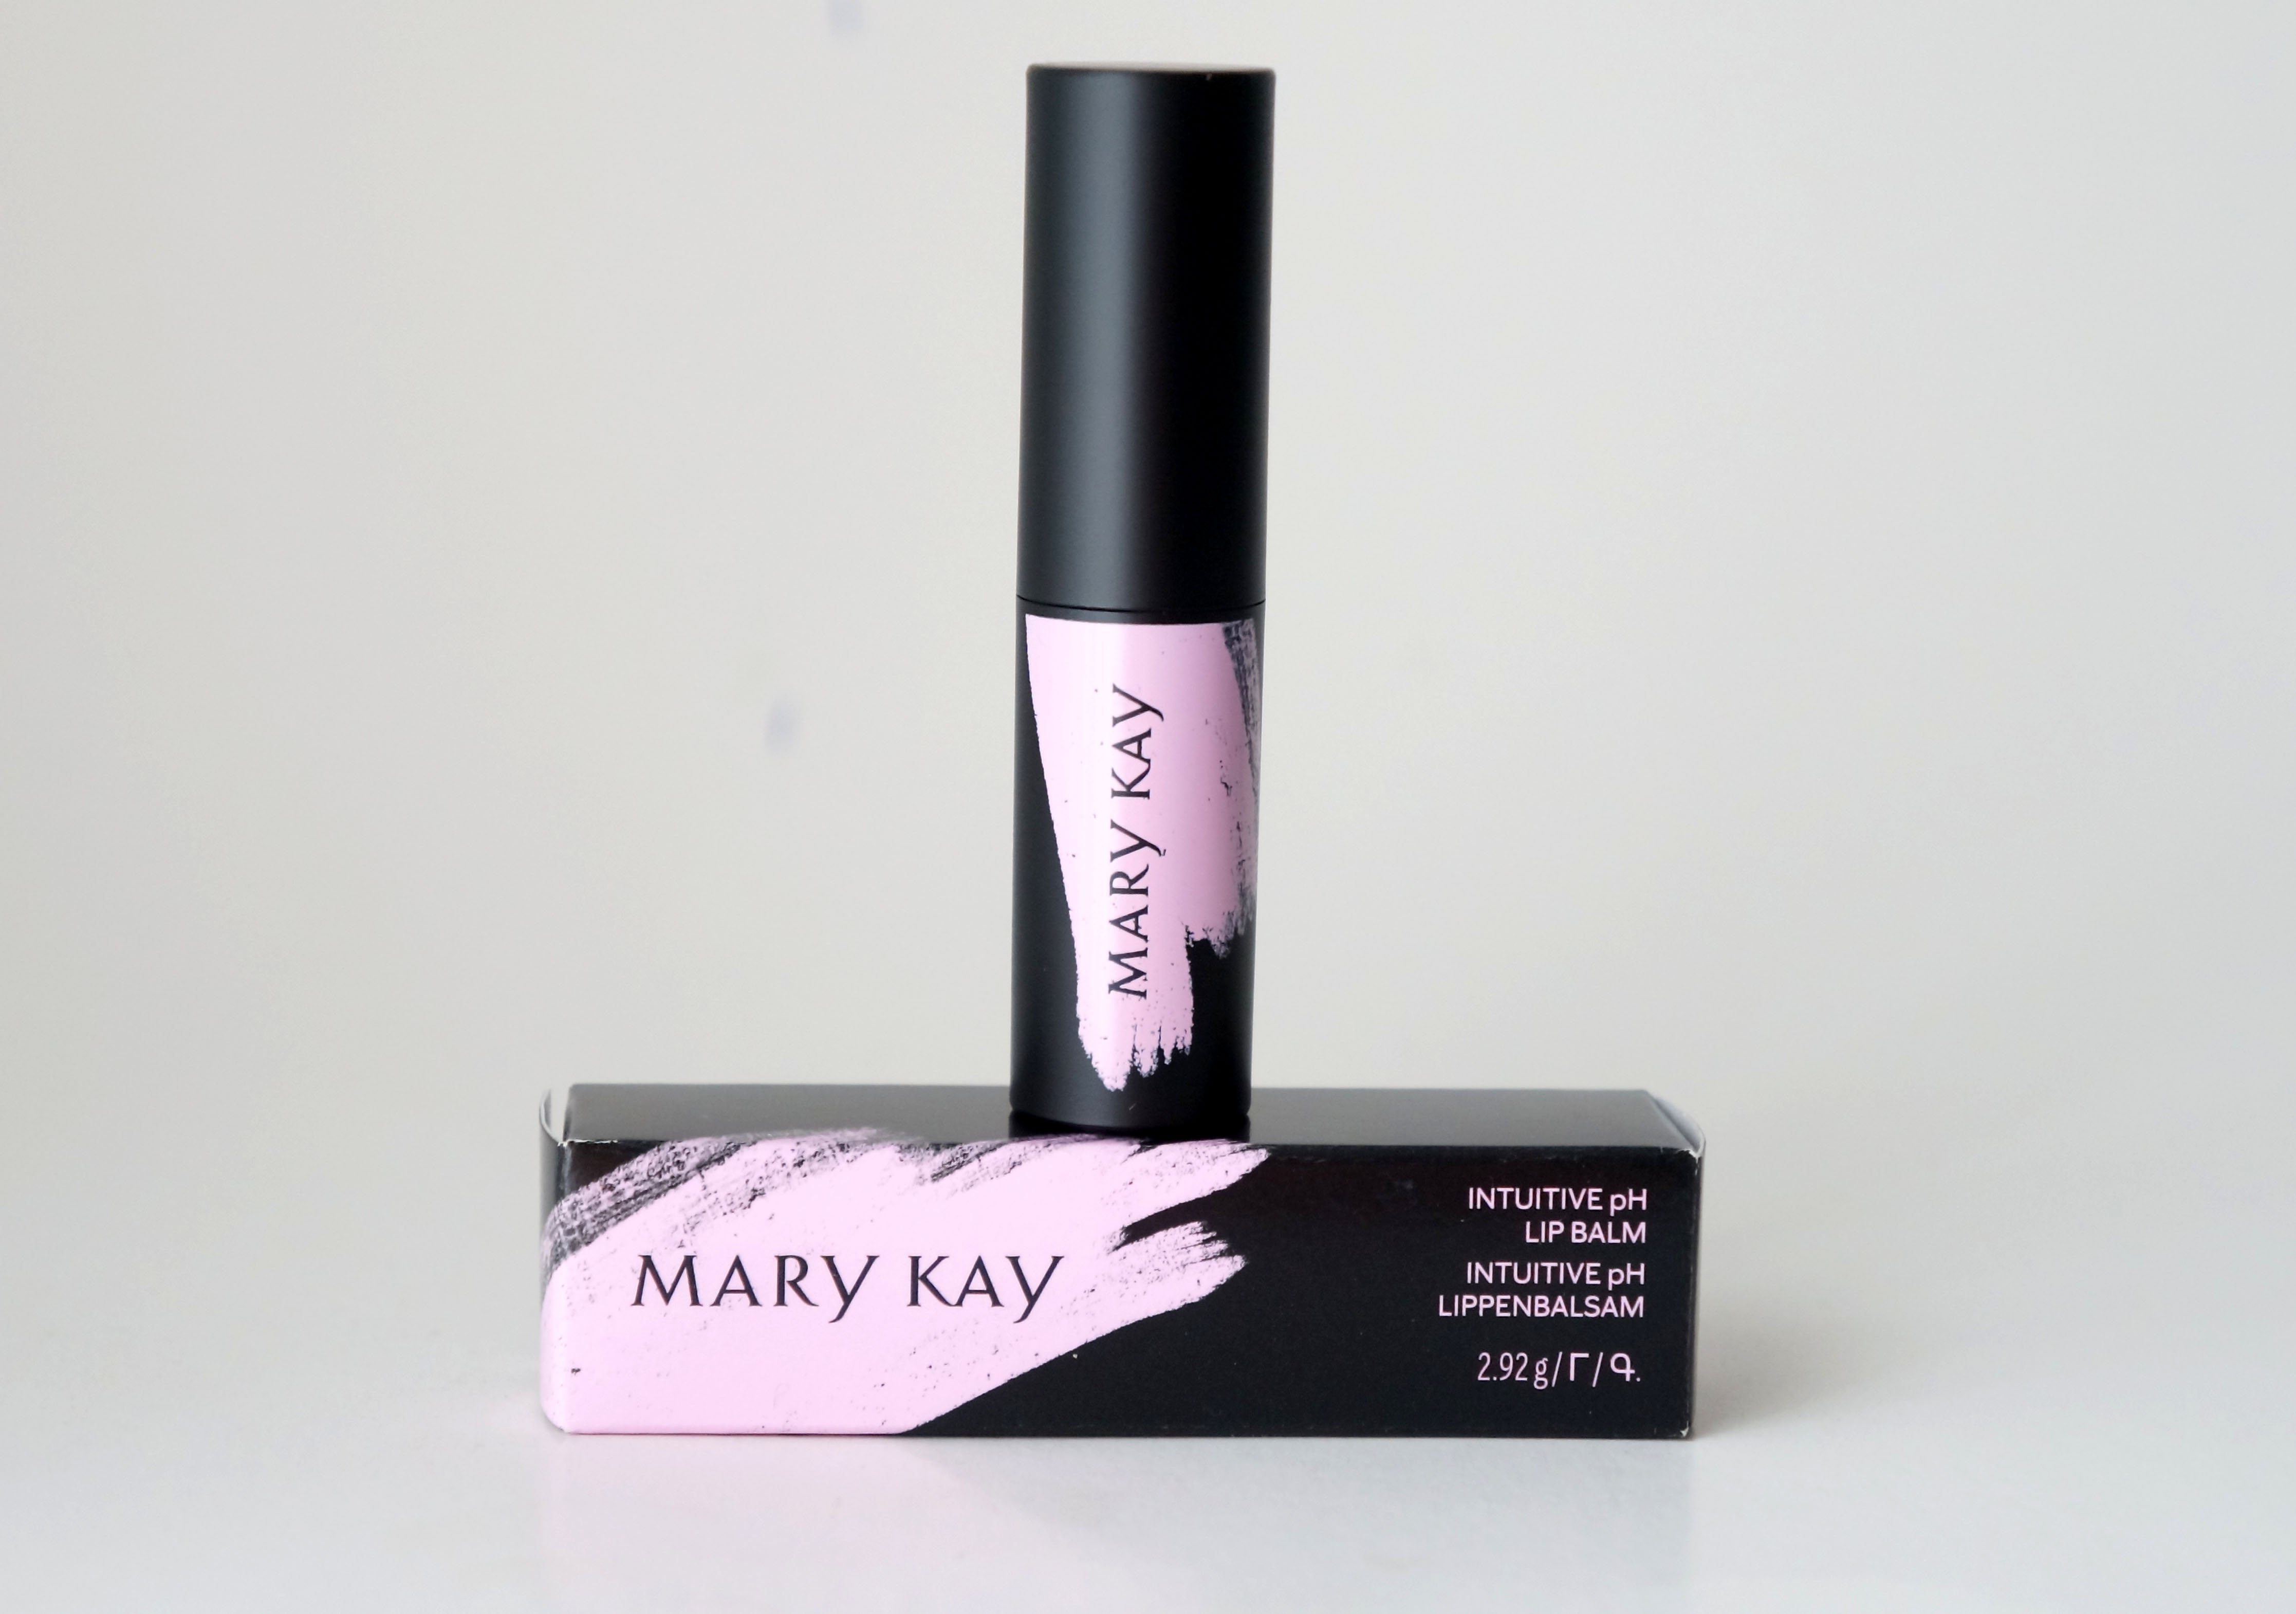 Make-Up Lippenbalsam Mary Kay Lippenbalsam Mary Kay Intuitive pH Lip Balm Lippenbalsam Farbe 2.92g